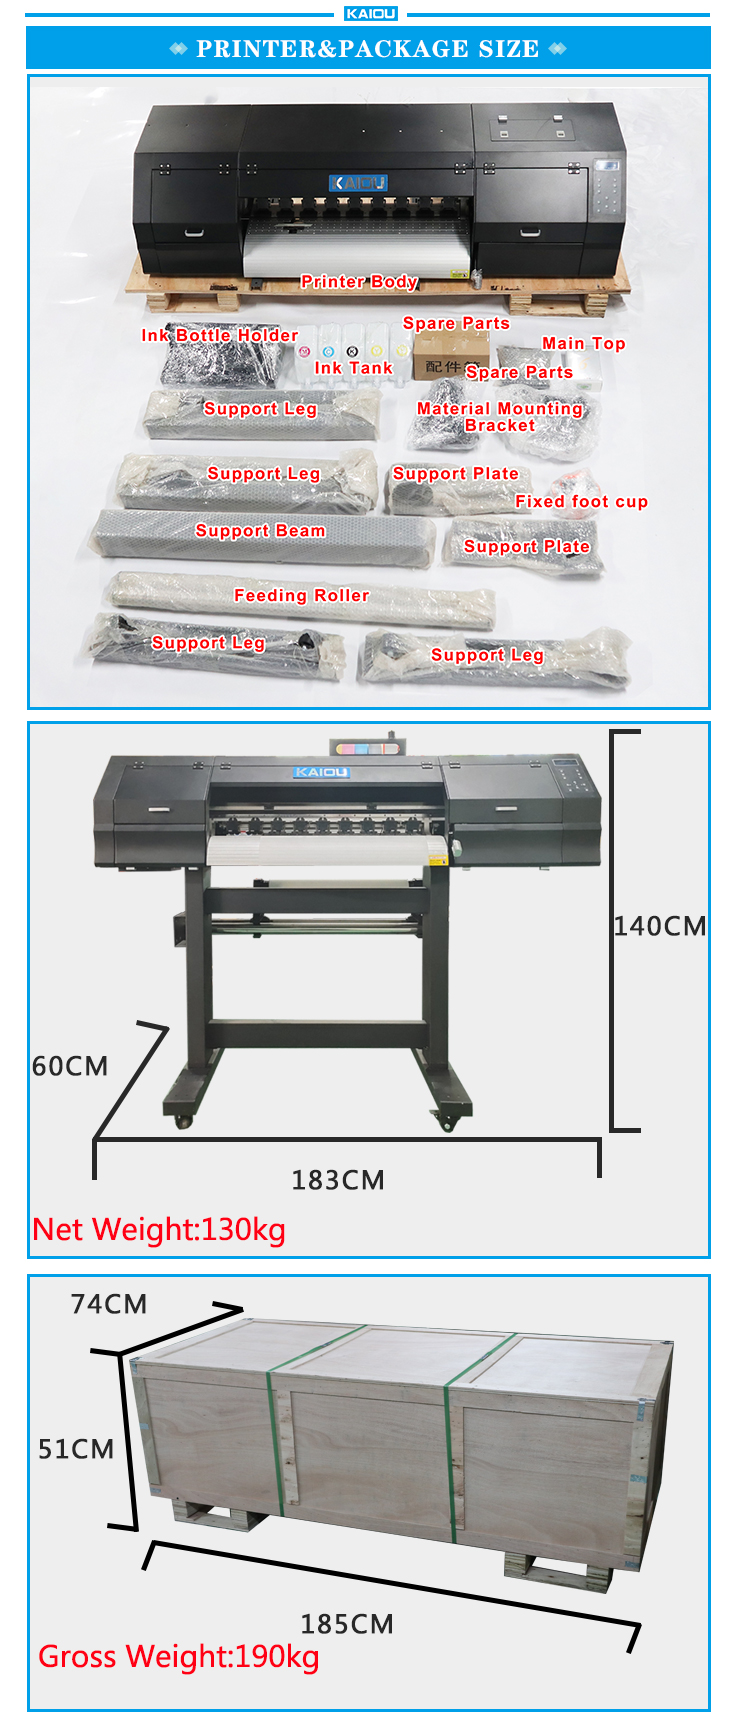 Kaiou 60 cm Rollendruck DTF-Druckmaschine T-Shirt-Drucker